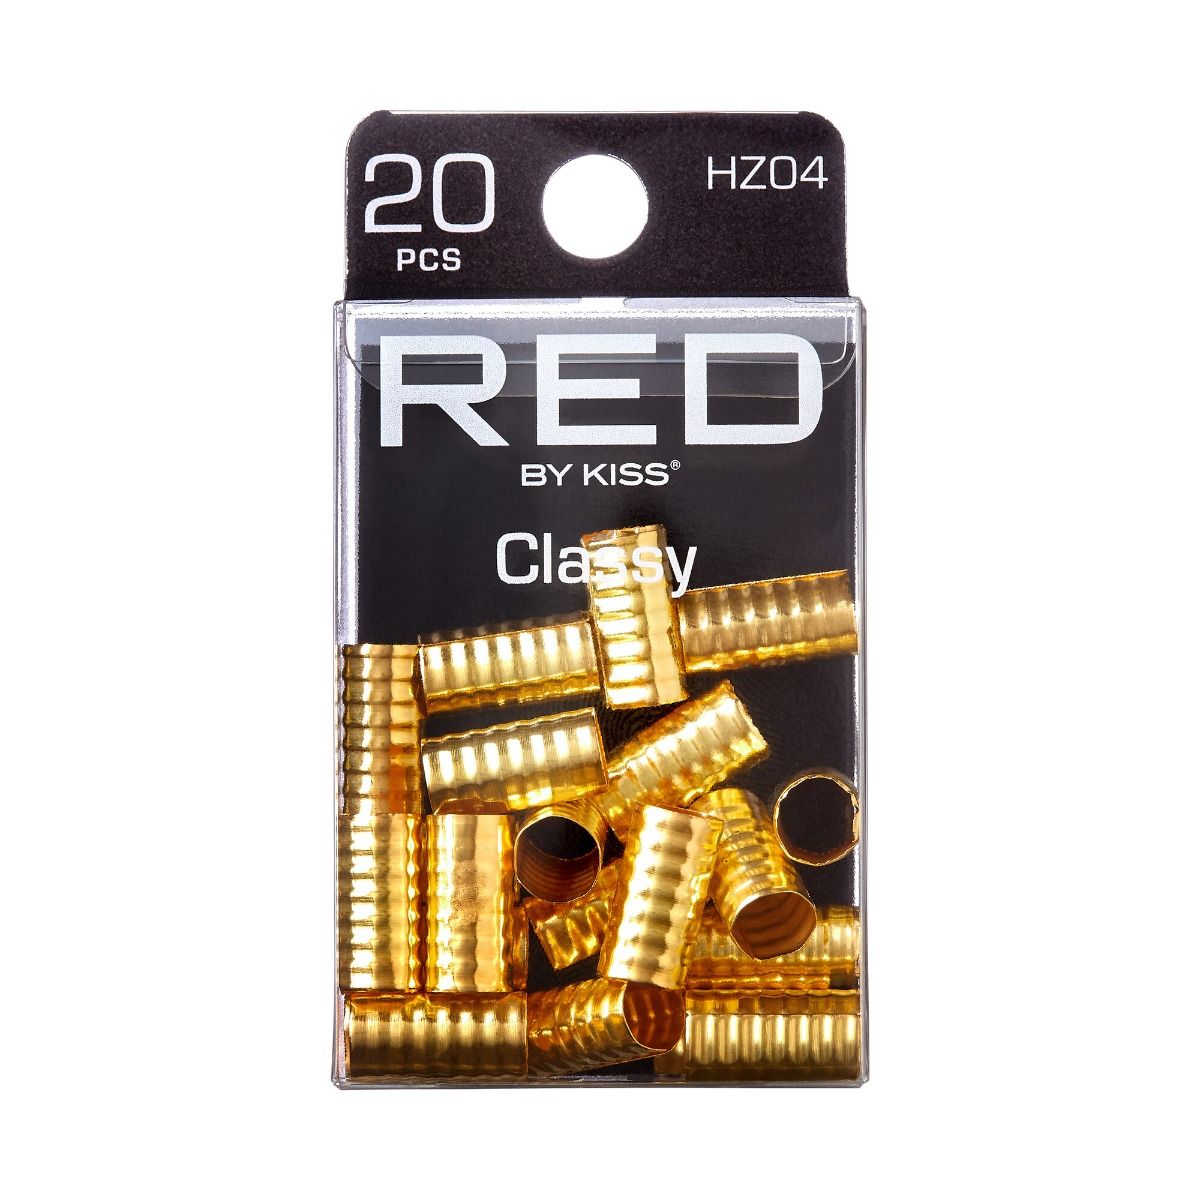 Red by Kiss 20pcs Classy Braid Charm #HZ04